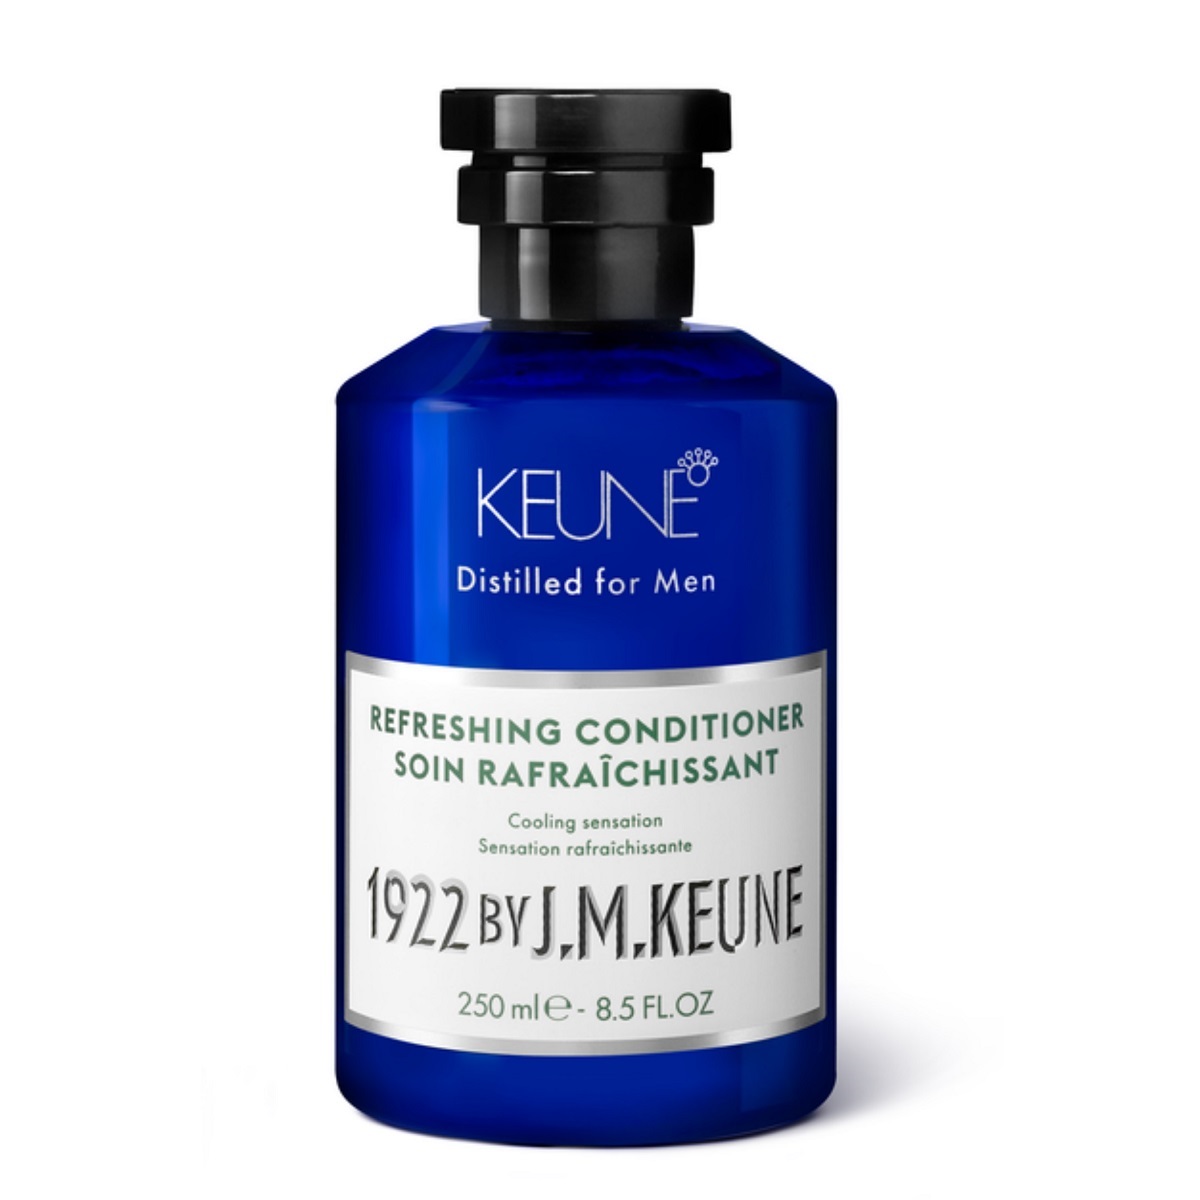 Keune Освежающий кондиционер Refreshing Conditioner, 250 мл (Keune, 1922 by J.M. Keune) keune 1922 by j m keune кондиционер для волос refreshing 250 мл